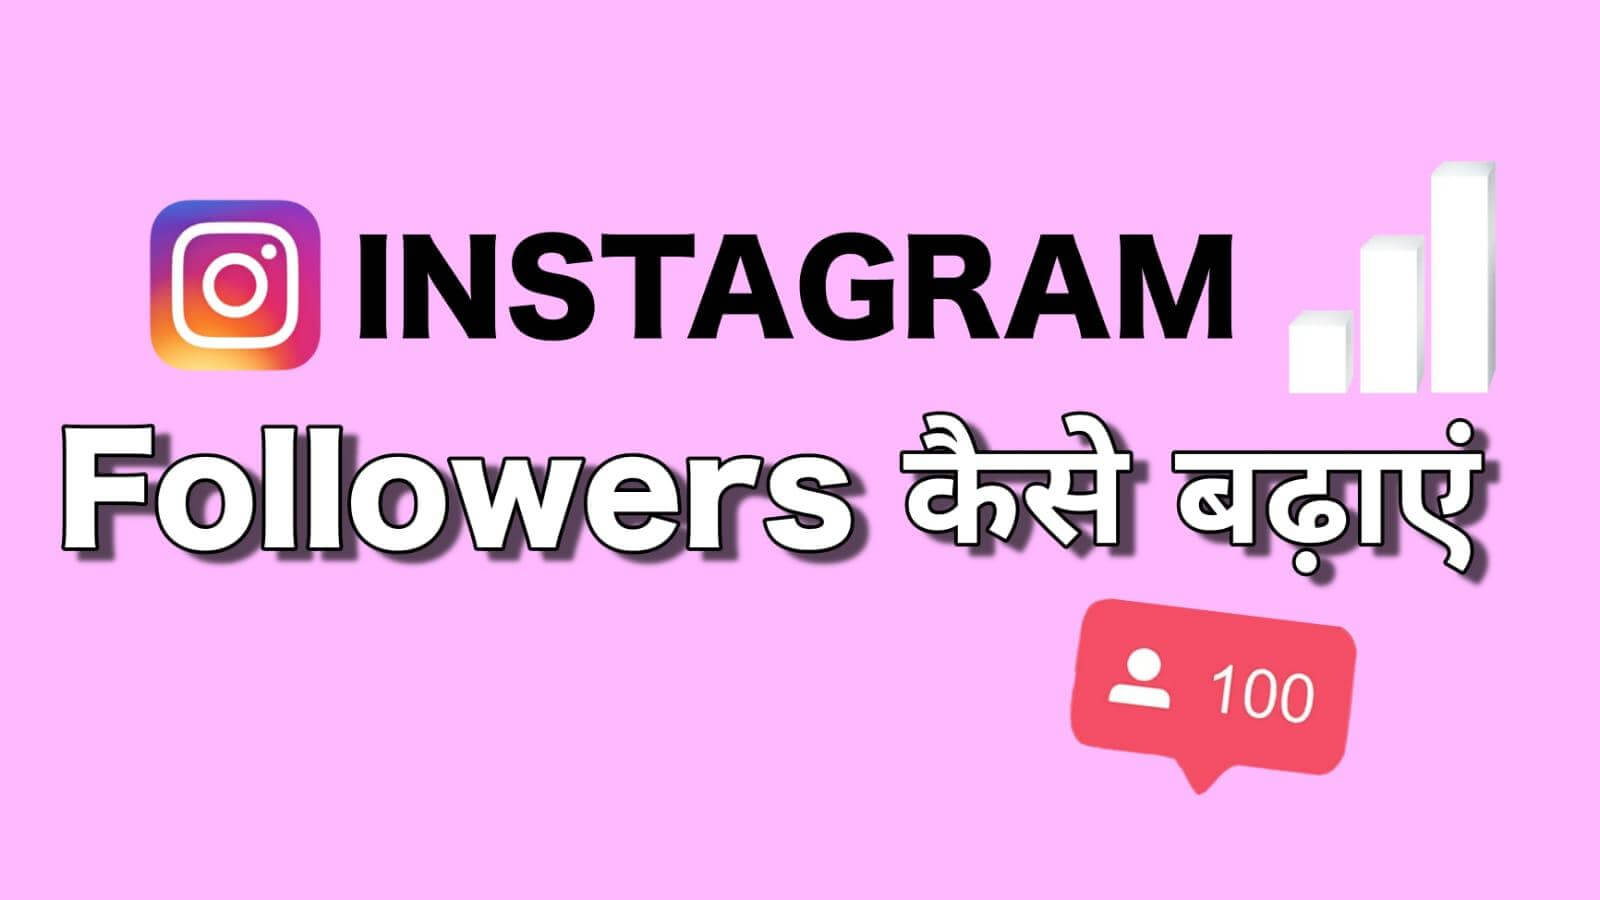 Instagram par followers kaise badhaye